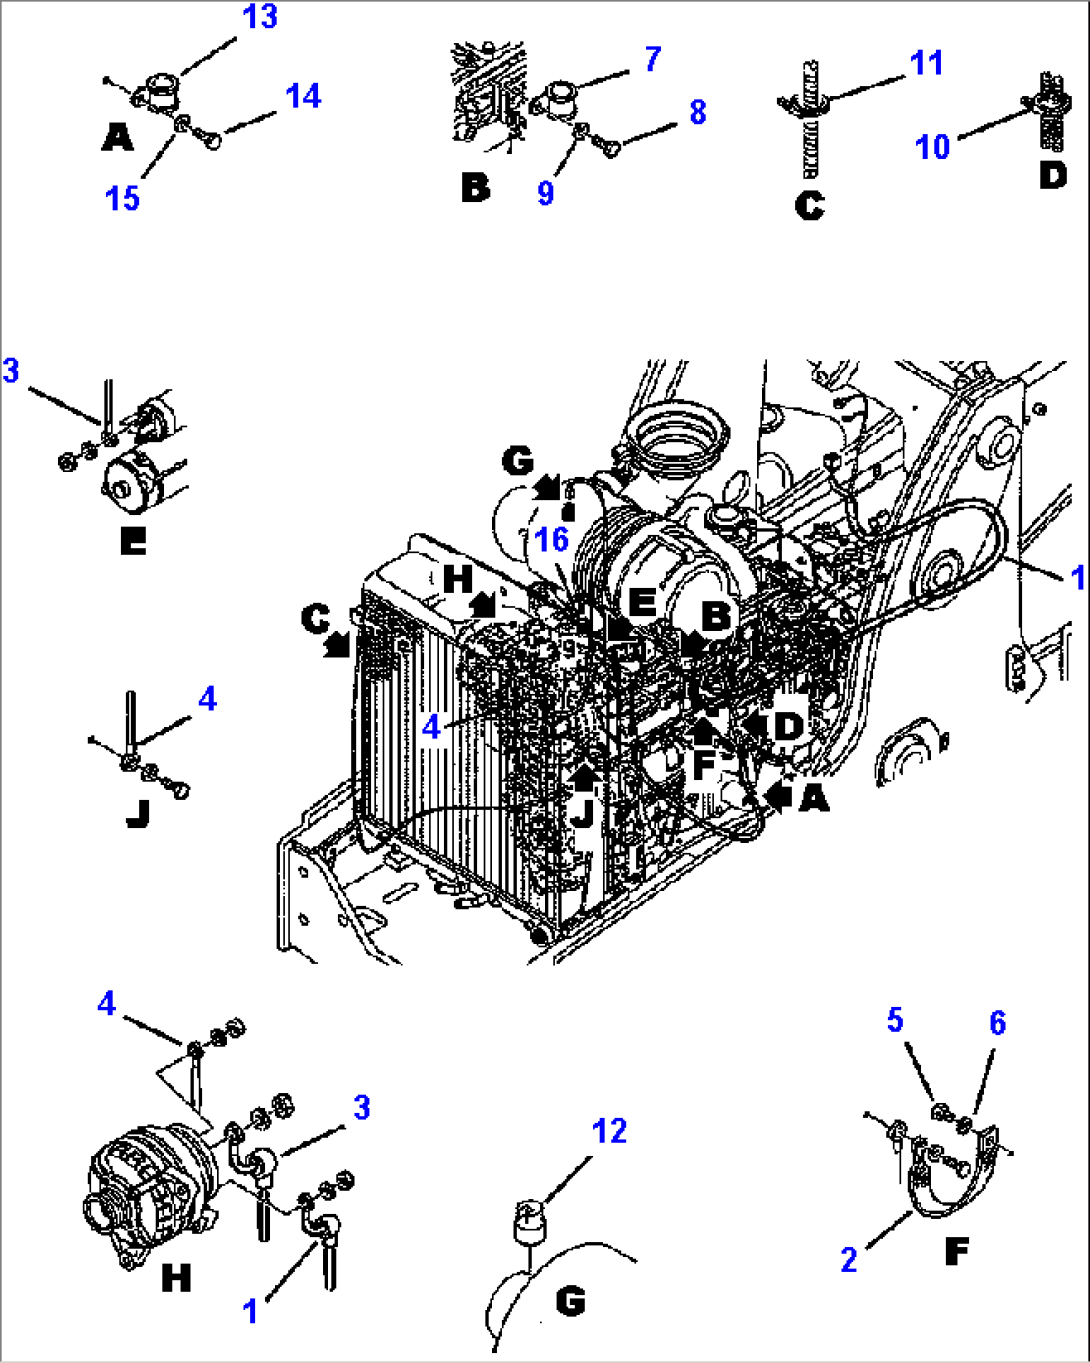 E1420-01A0 ENGINE WIRING (1/2)